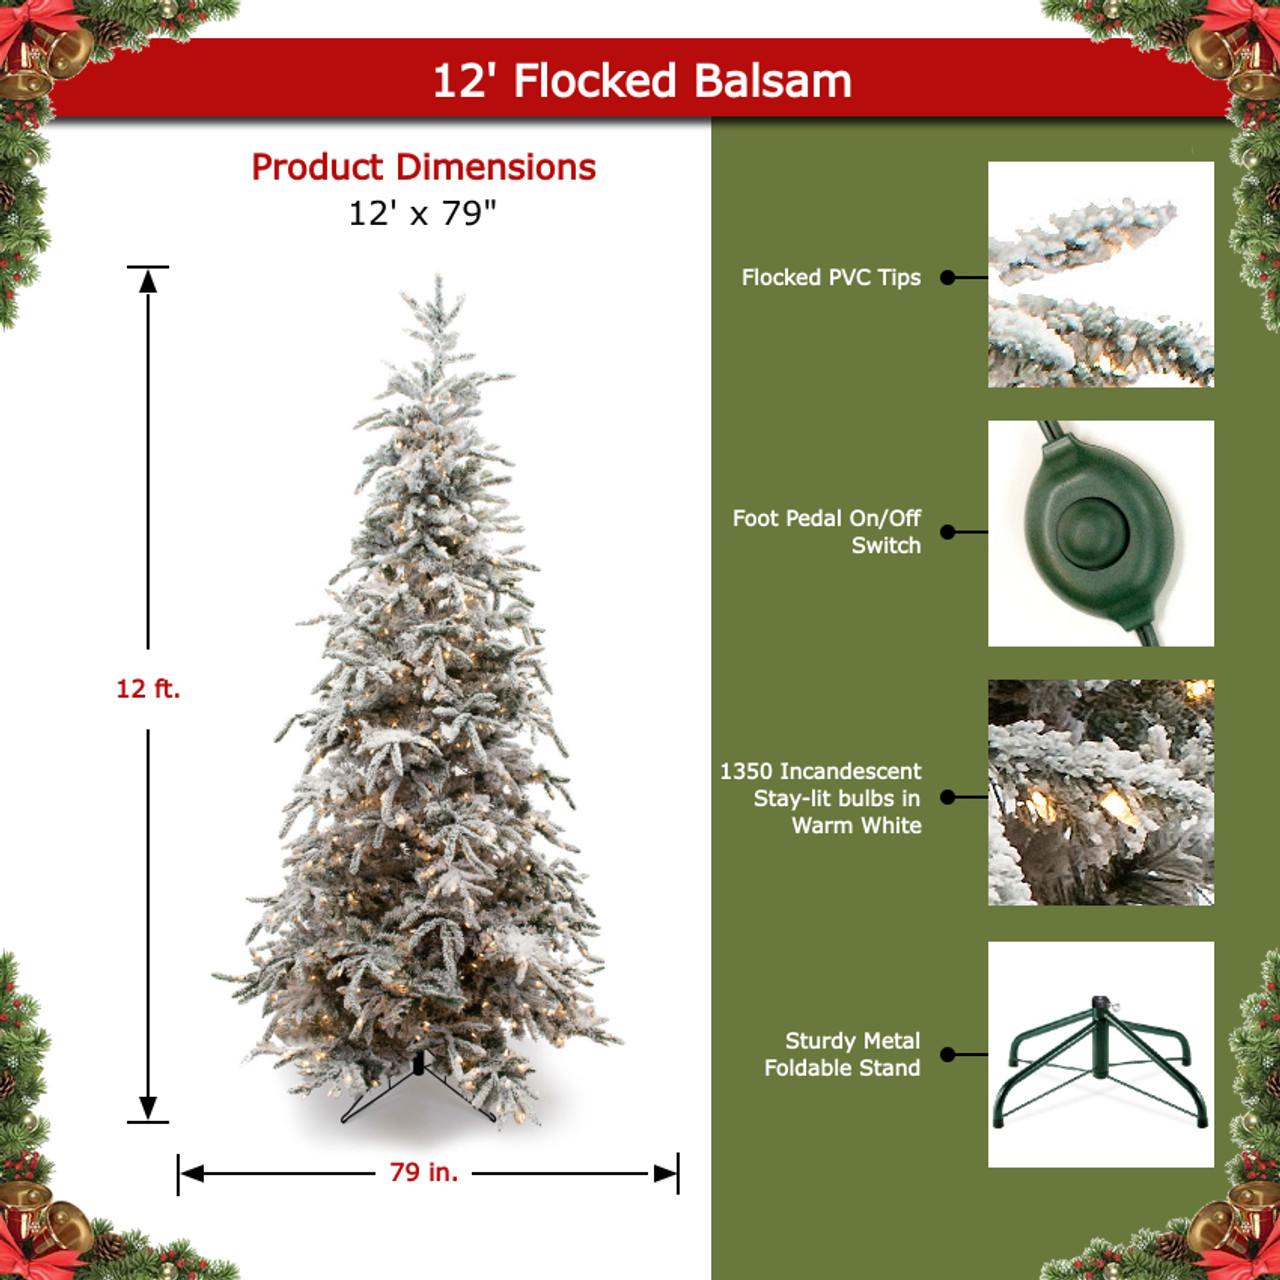 12' Flocked Balsam Pine Tree